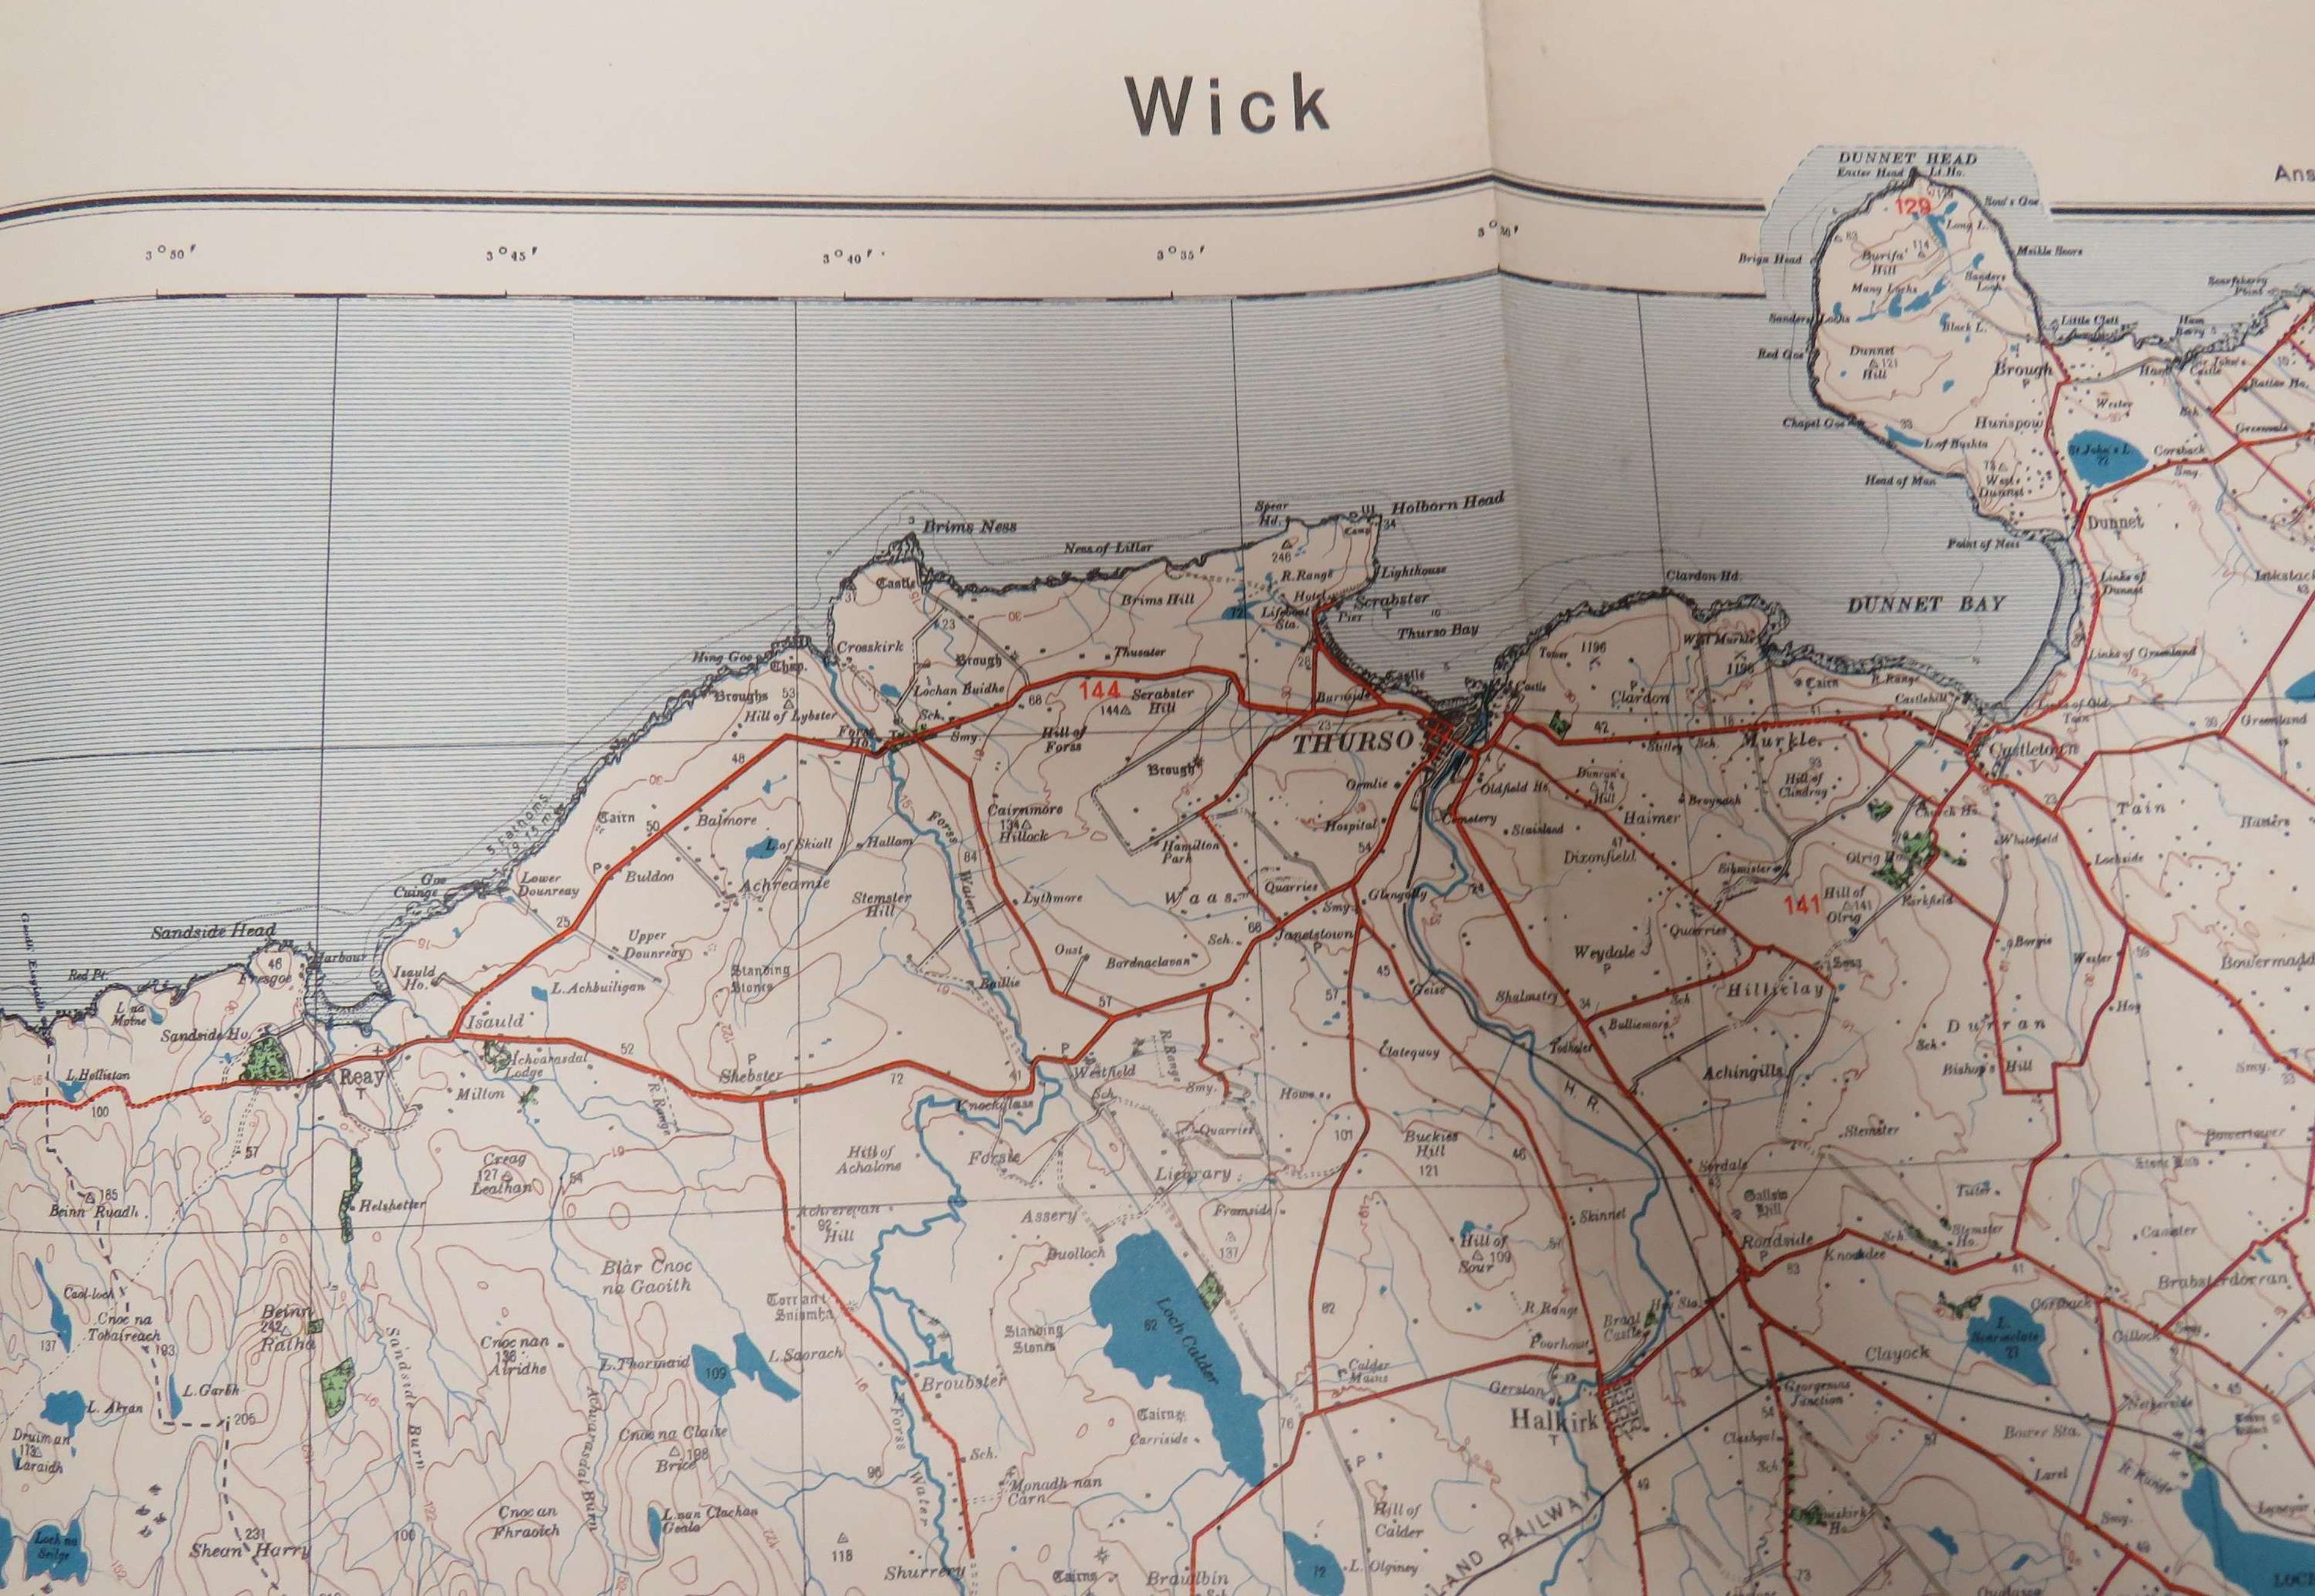 WW 2 German Invasion Map of Wick